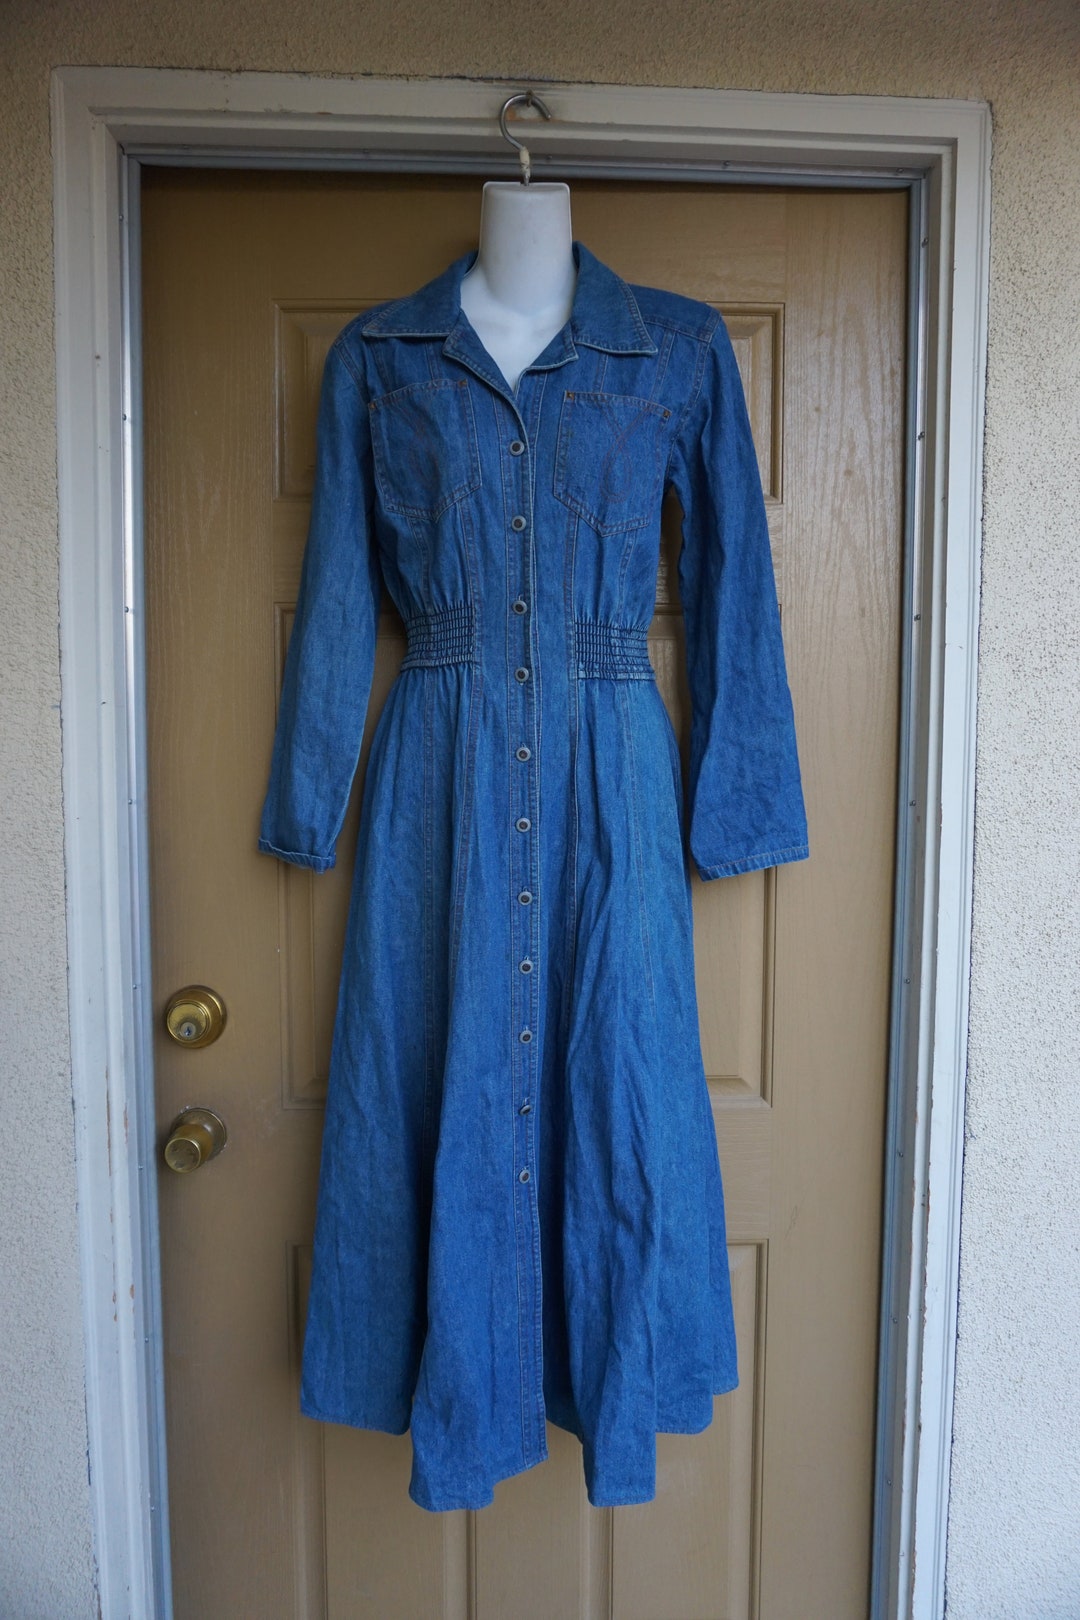 Karen Alexander 80s 90s Denim Jean Dress Size 4 Small S 1980s - Etsy